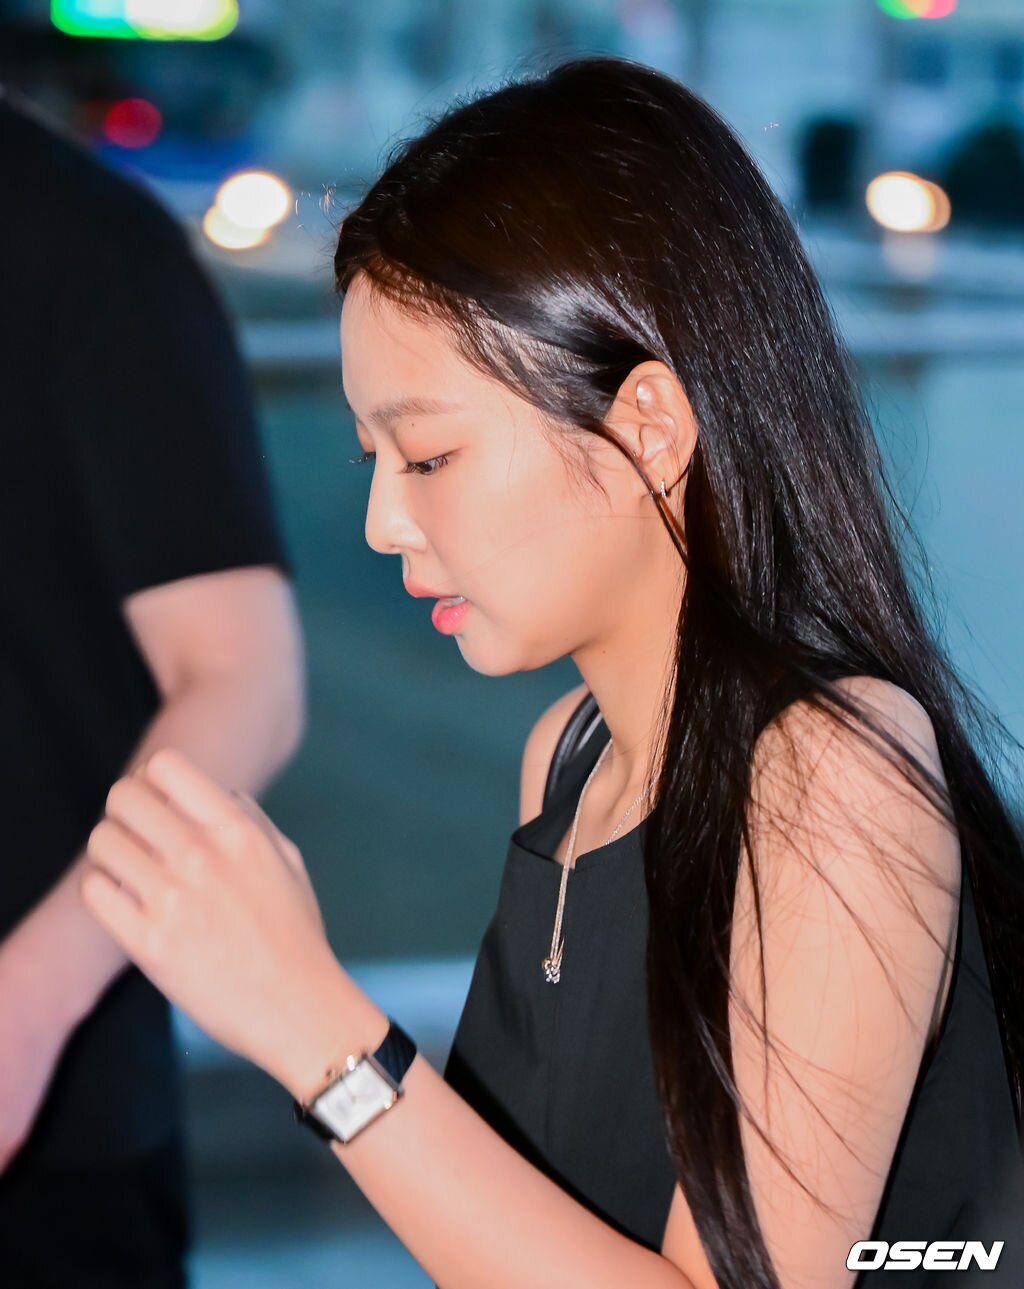 230810 BLACKPINK Jennie at Incheon International Airport | kpopping